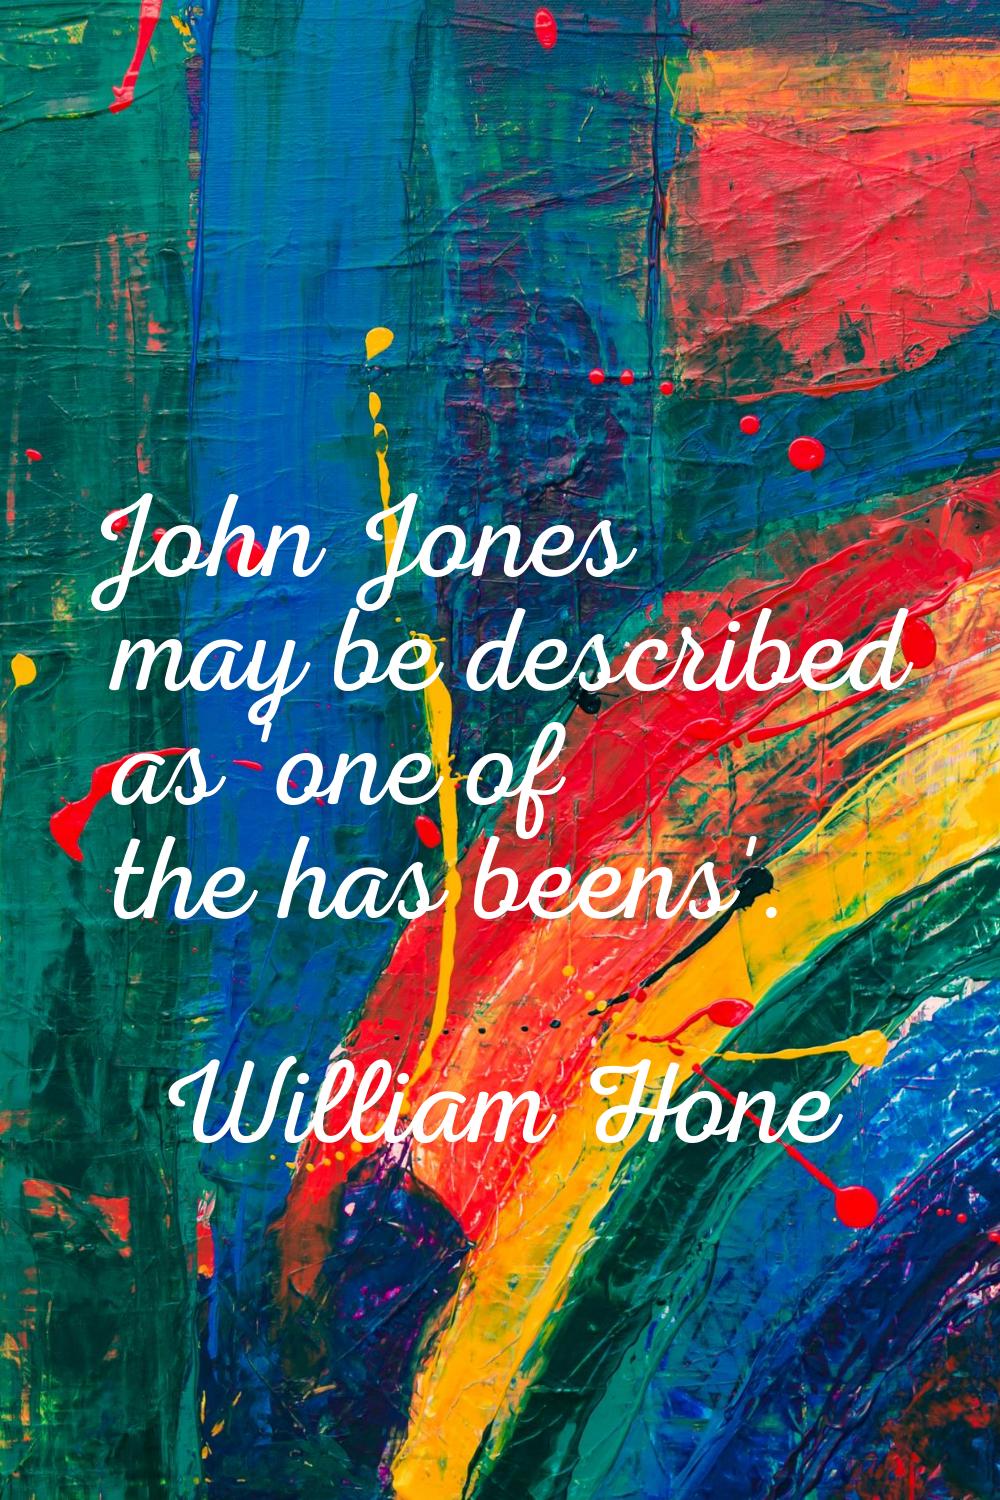 John Jones may be described as 'one of the has beens'.